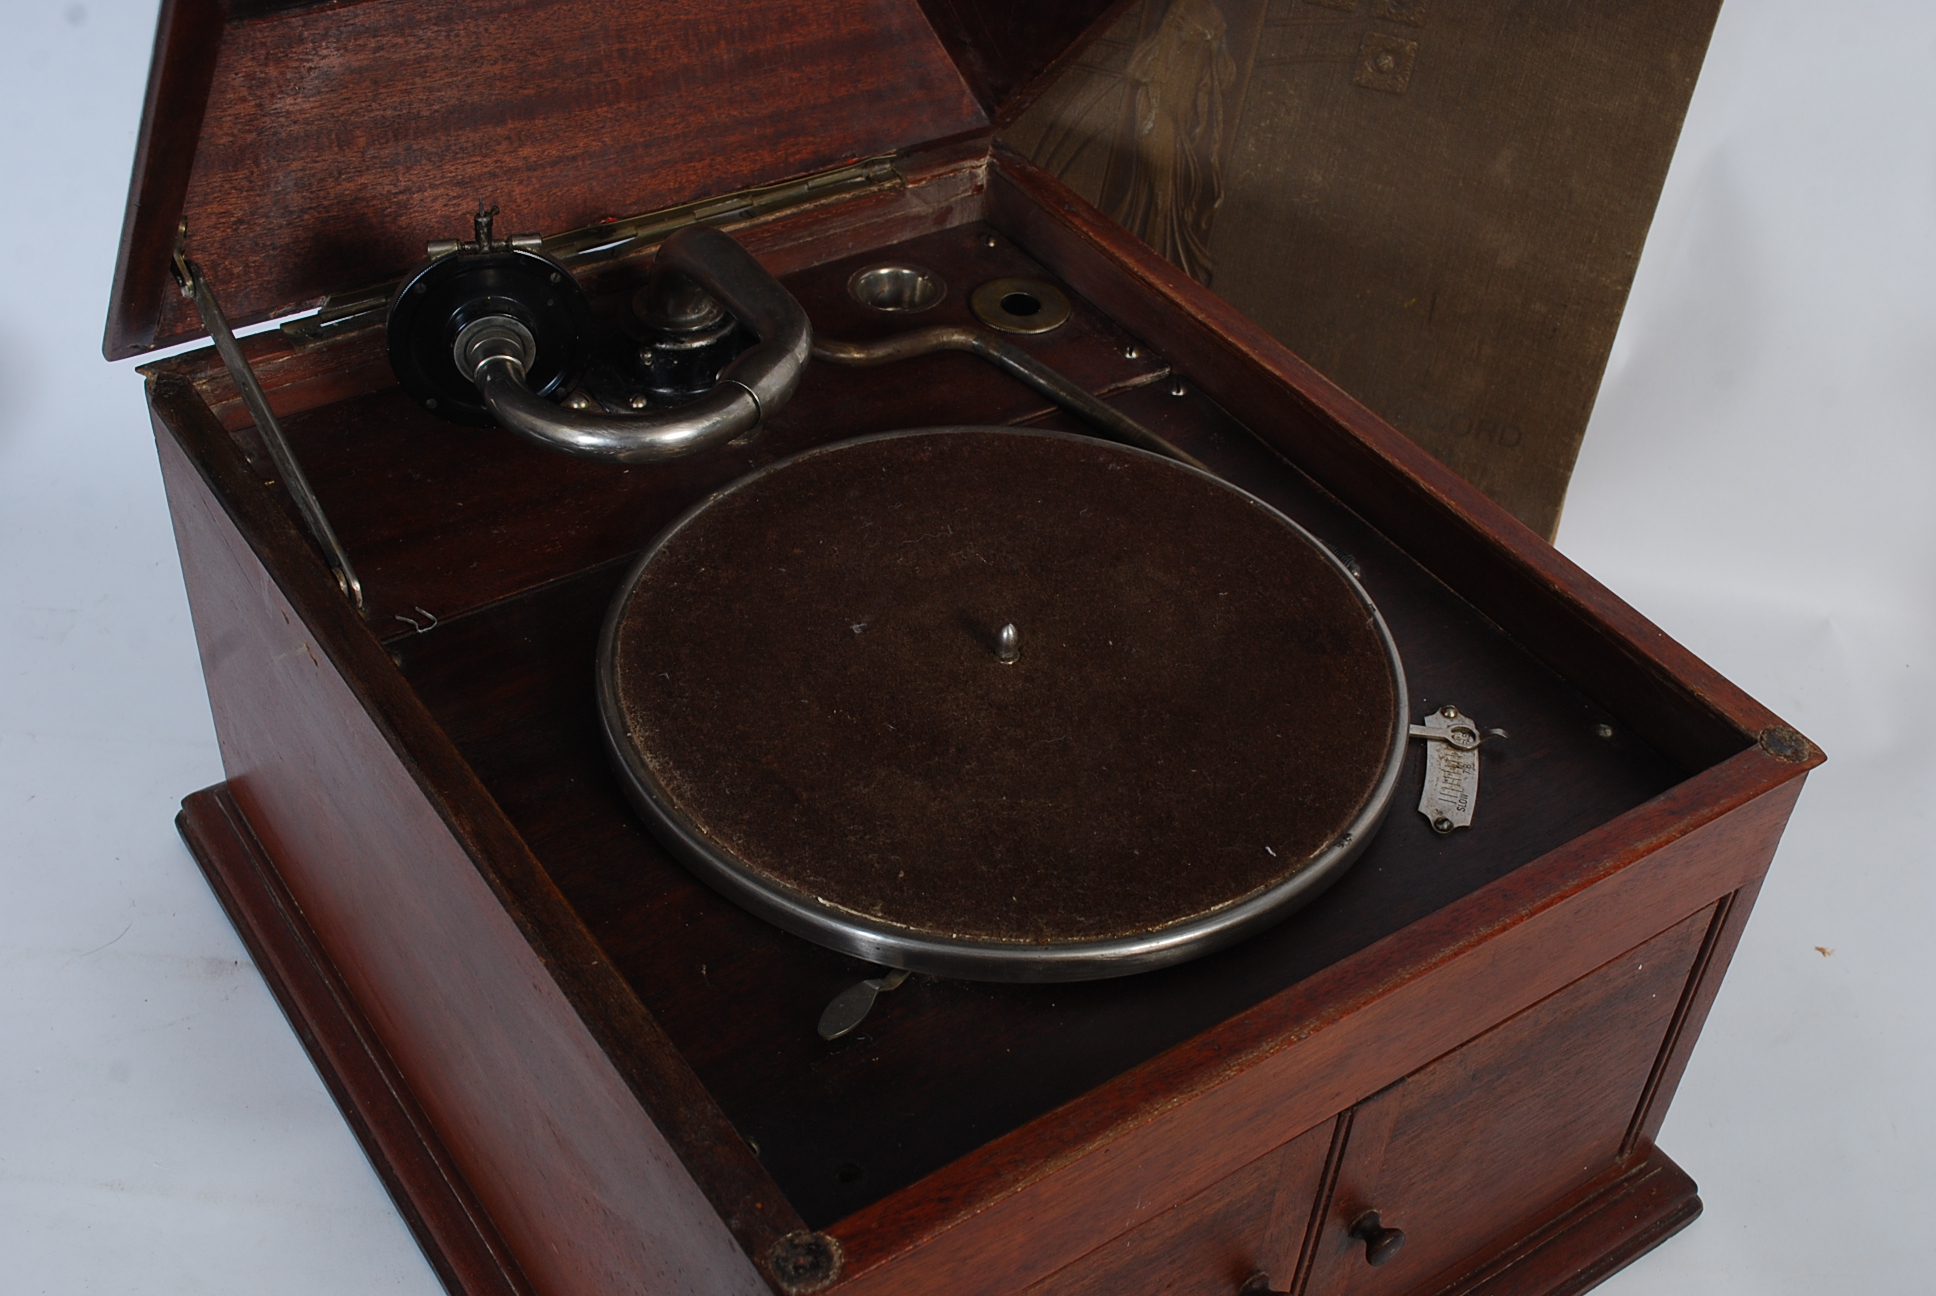 A vintage wind-up gramophone